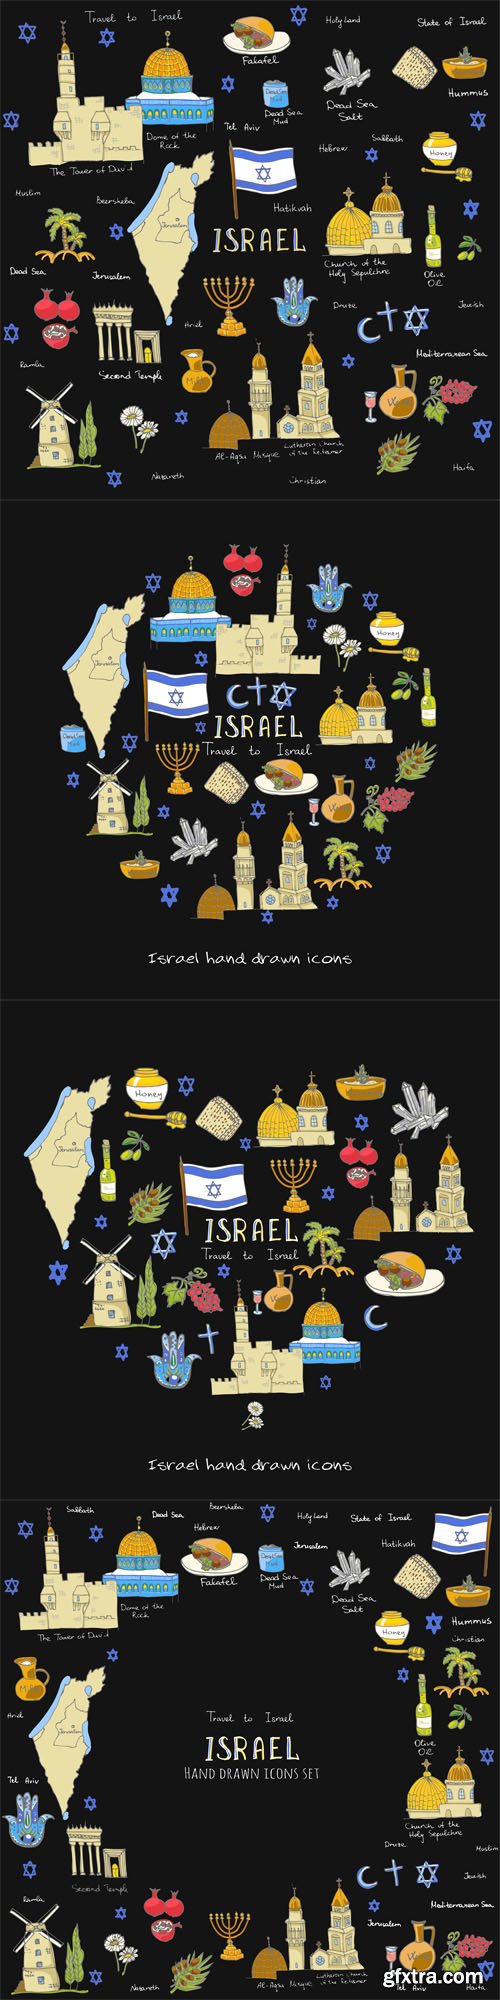 Set of hand drawn Israel icons - Vectors A000012